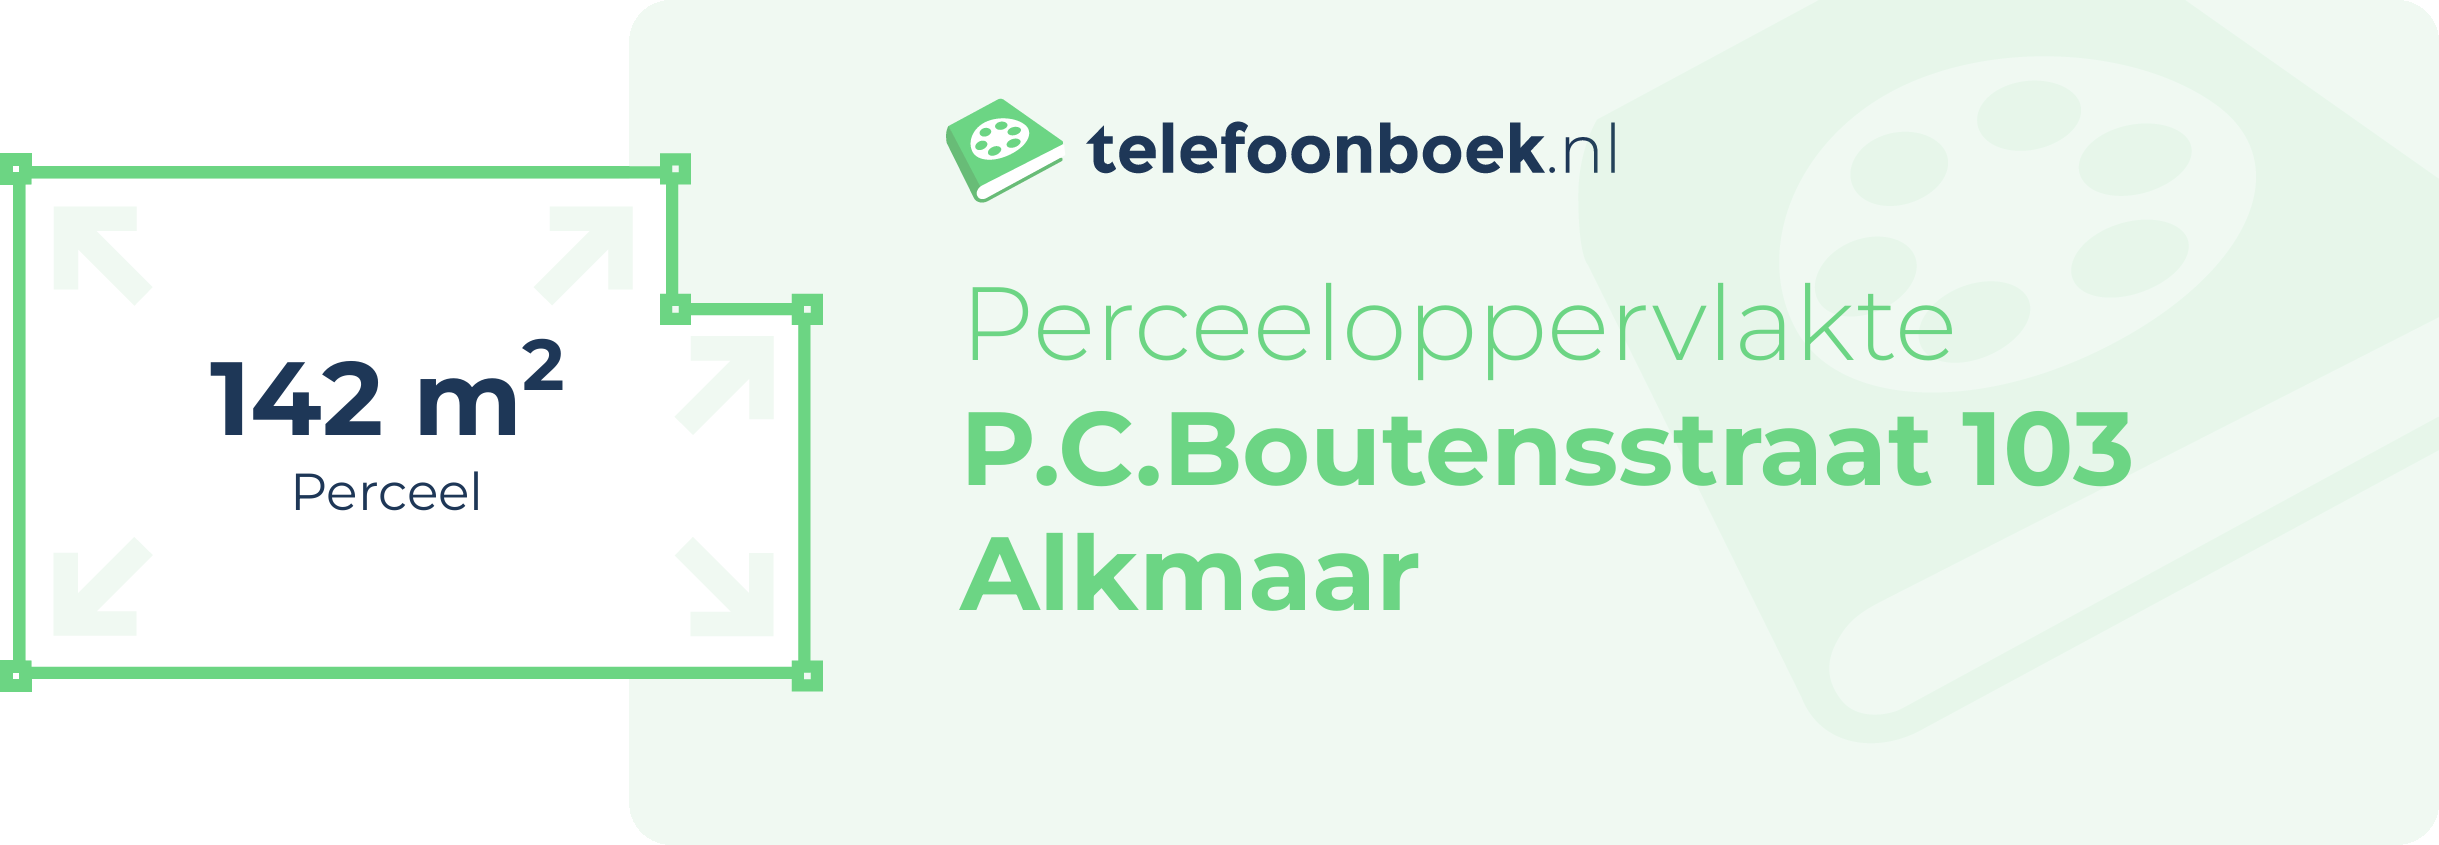 Perceeloppervlakte P.C.Boutensstraat 103 Alkmaar